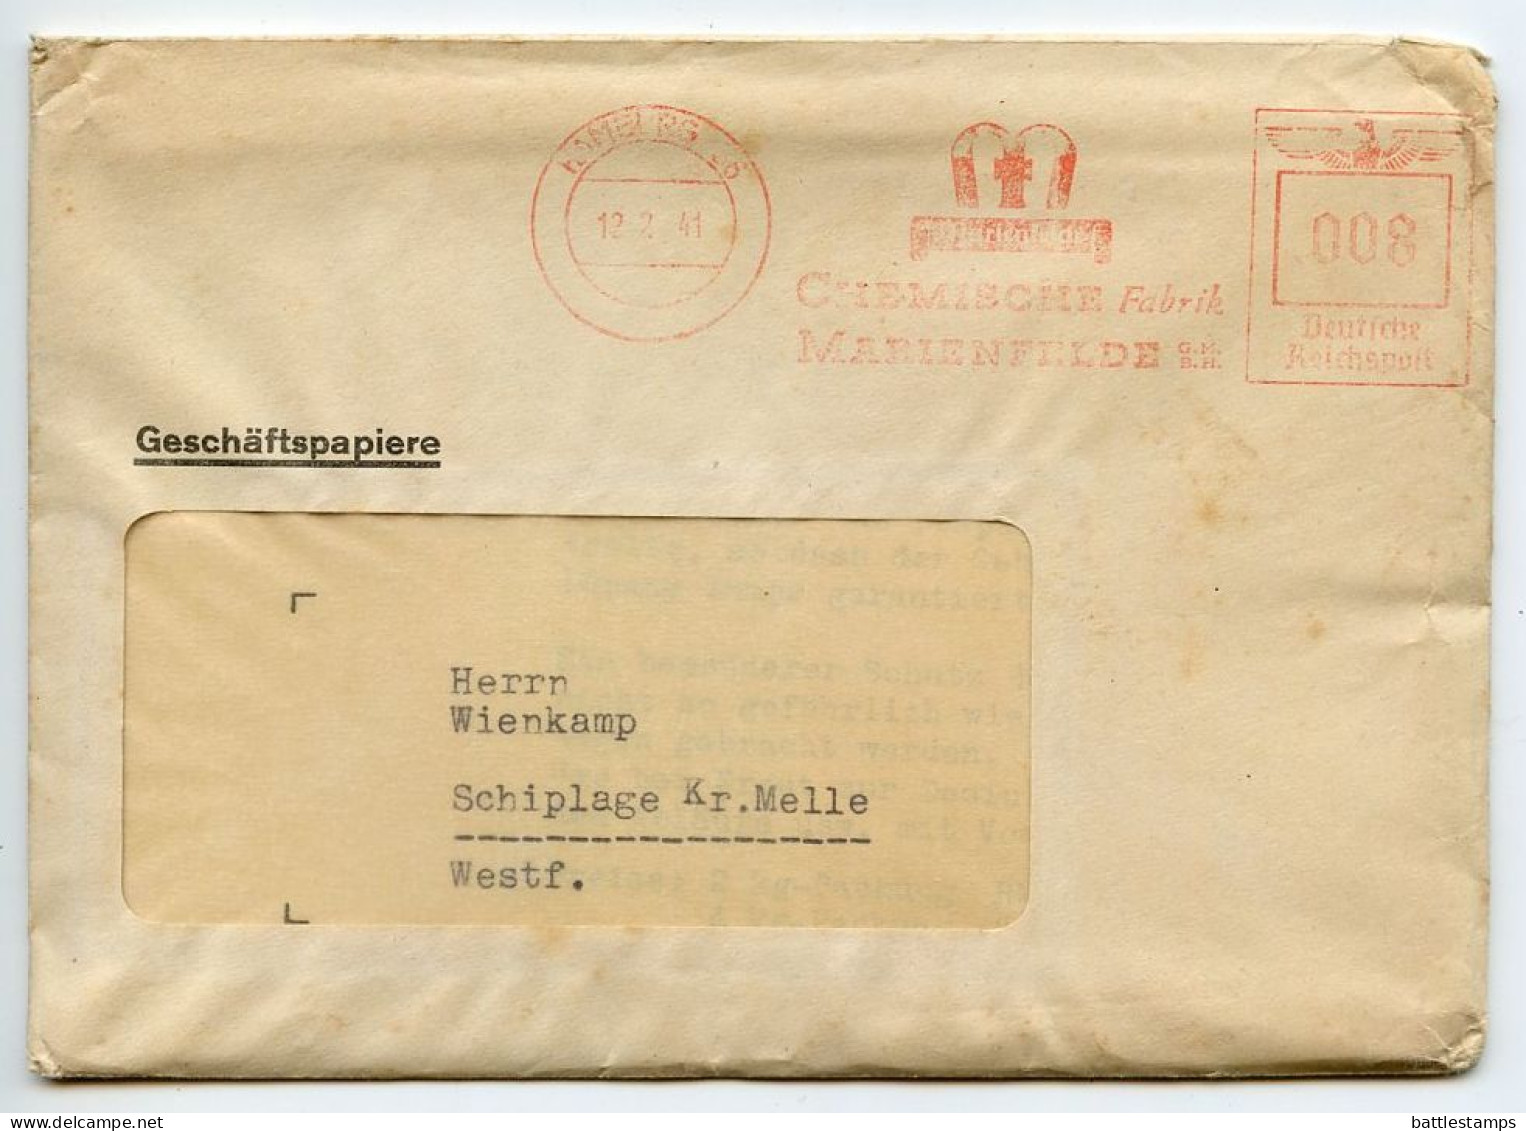 Germany 1941 Cover W/ Letter & Ad Pamphlet (Pest Control); Hamburg - Chemische Fabrik Marienfelde; 8pf. Meter W/ Slogan - Frankeermachines (EMA)